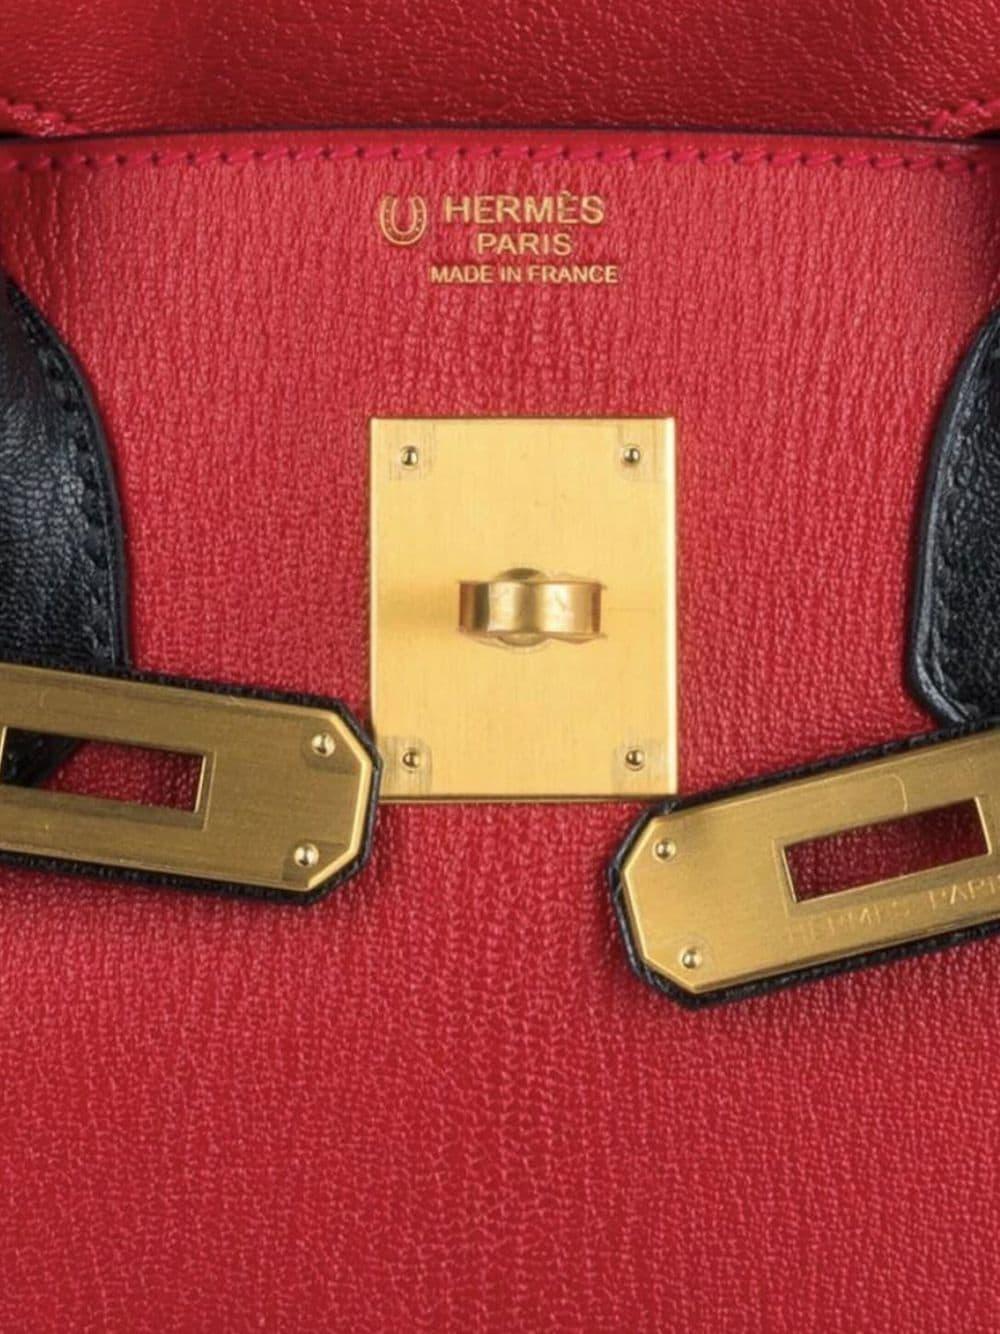 Hermès Hermes Birkin Hss 30 Bag Rouge Casaque And Black Chevre